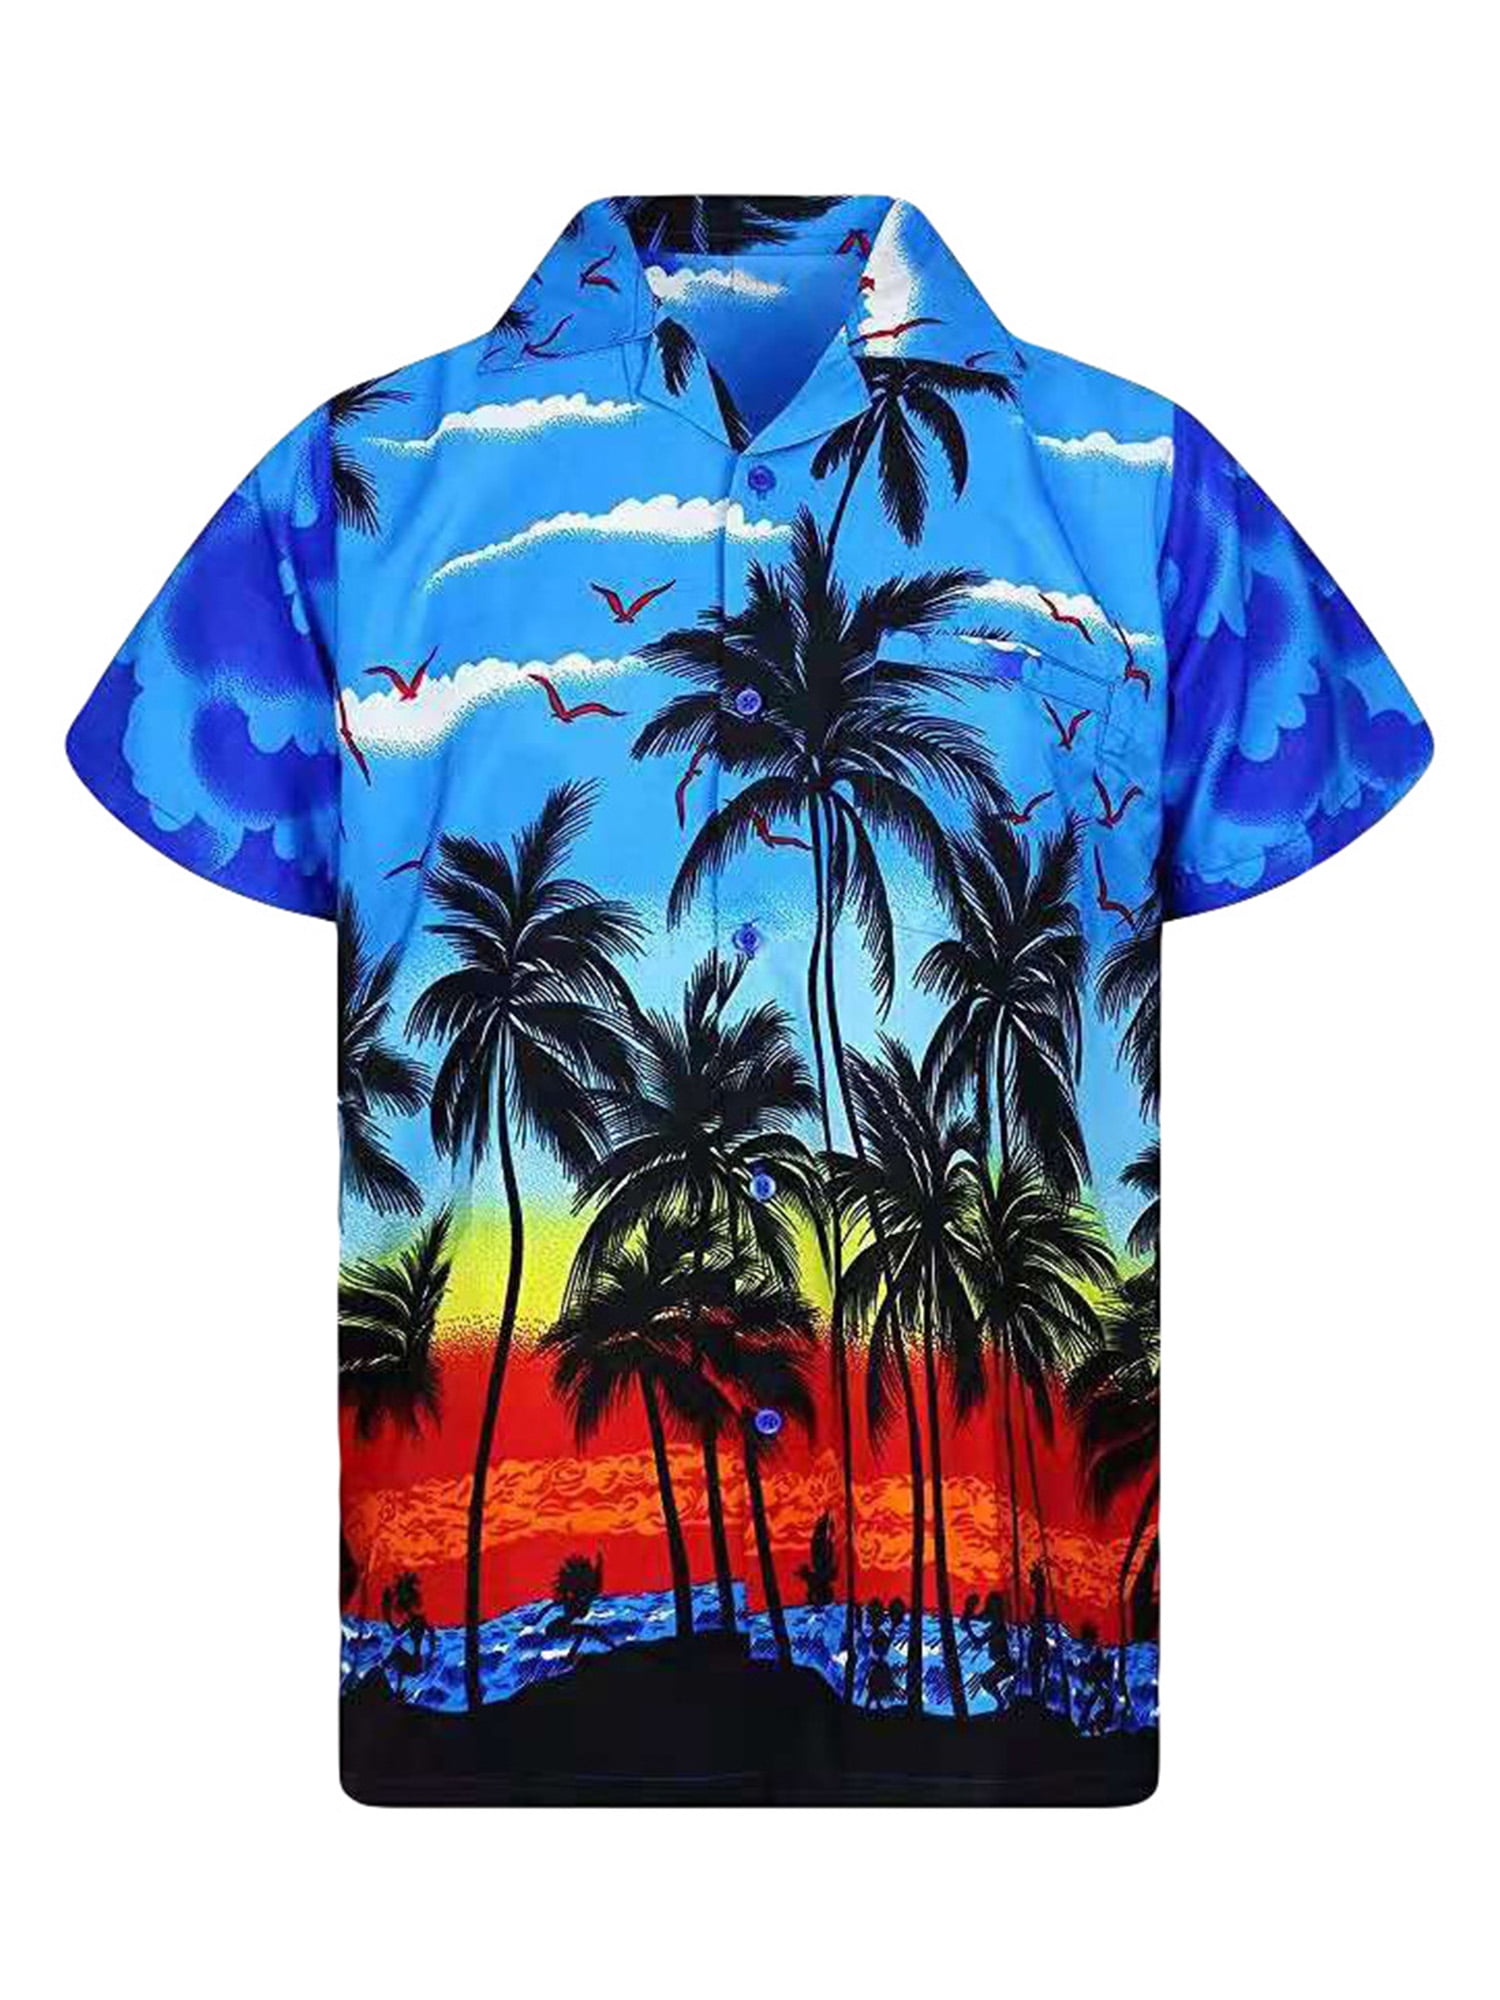 Summer Men's Short Sleeve Tops Shirt Hawaiian Beach Holiday Casual Funny Blouse